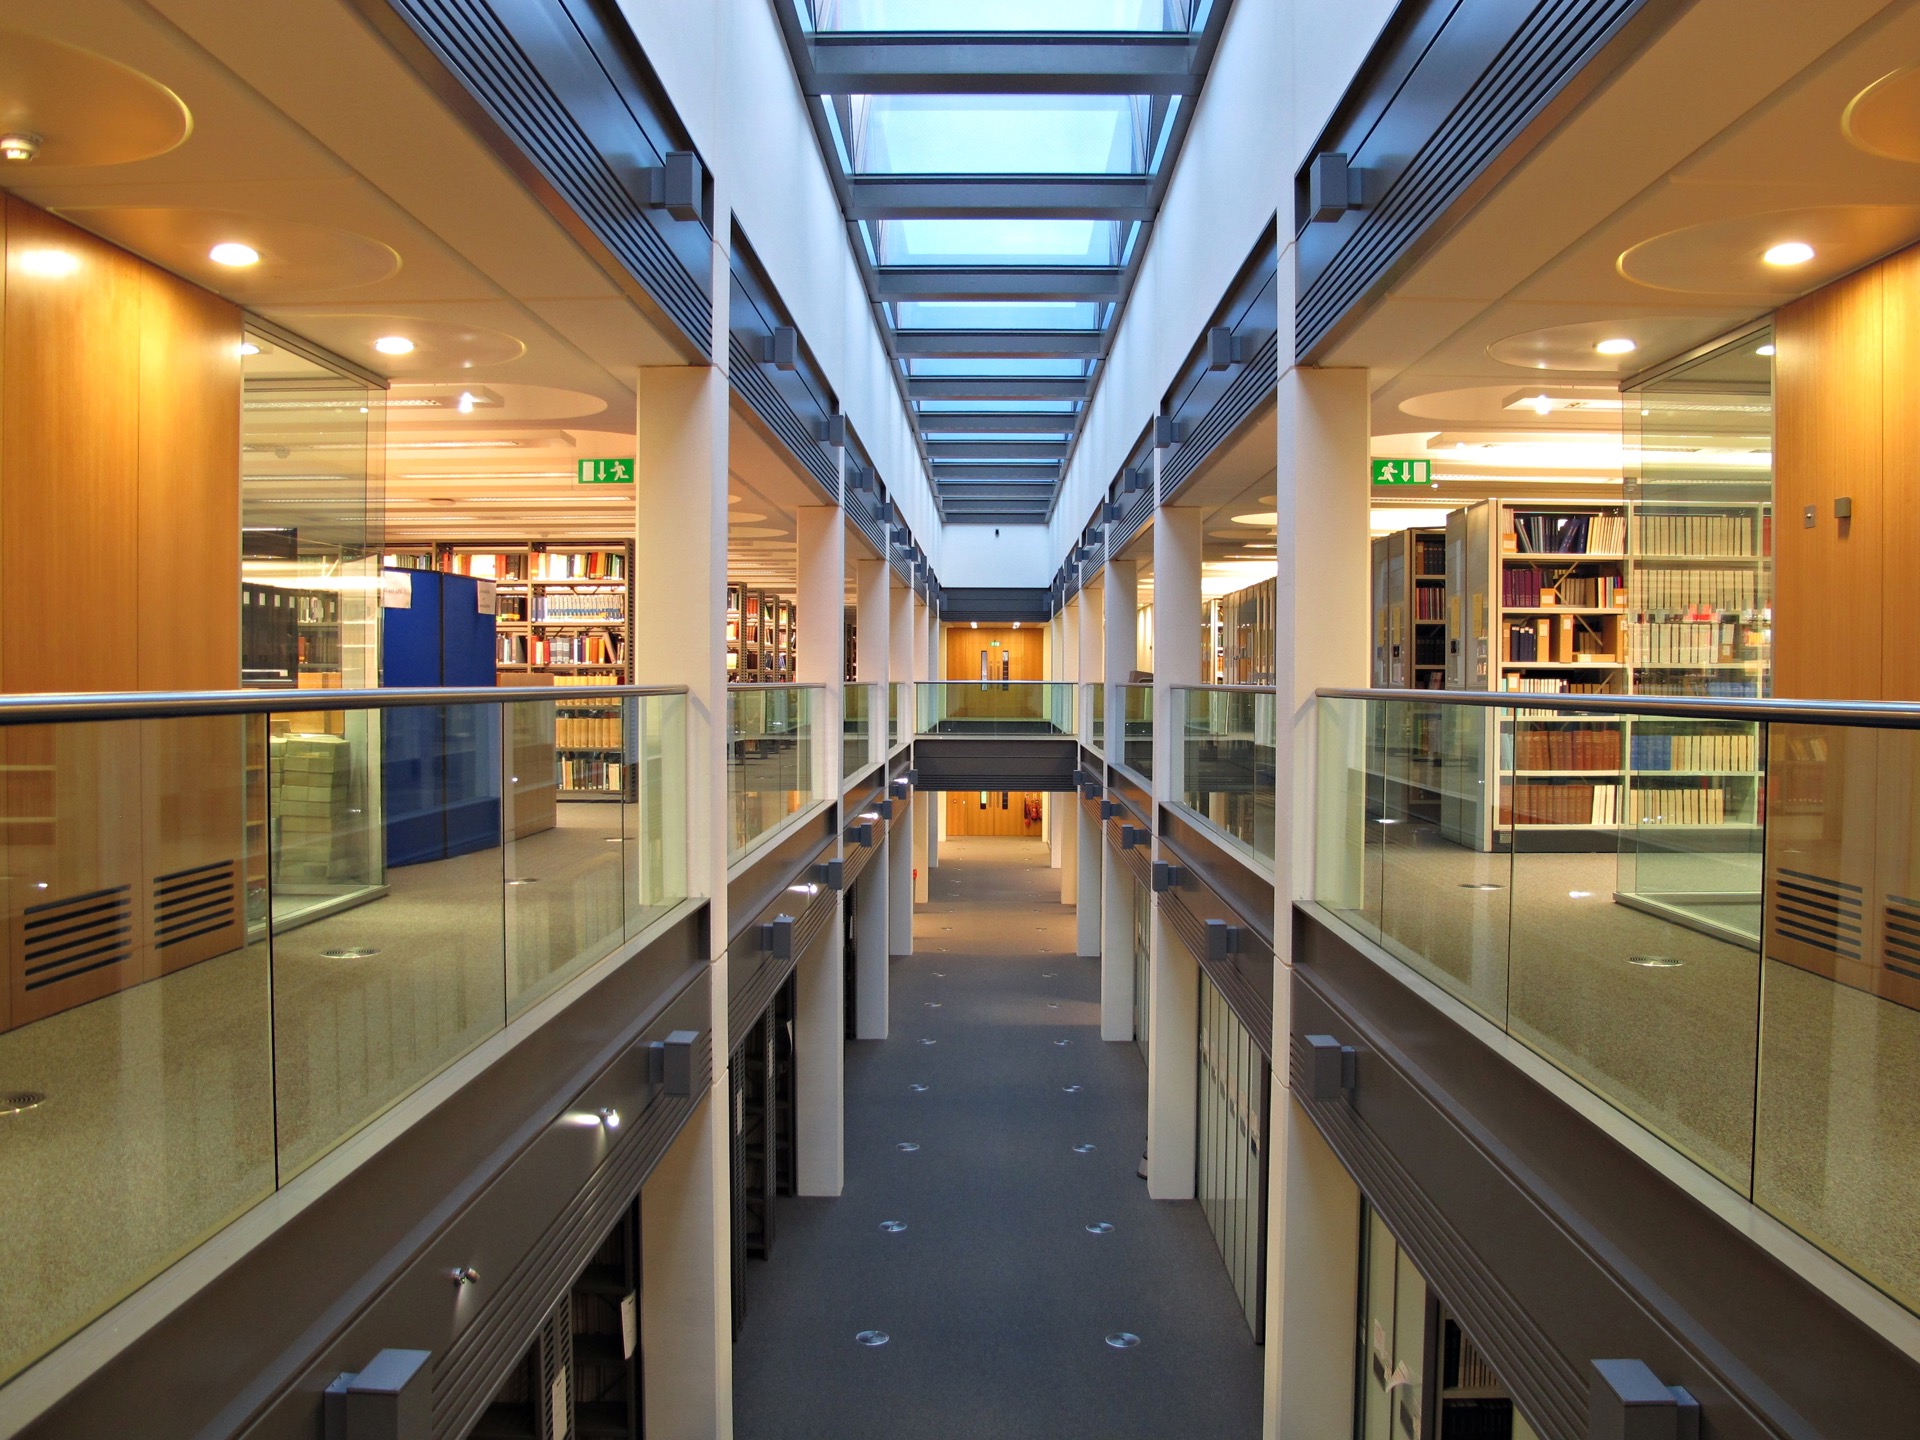 John Paul II Library university interior space